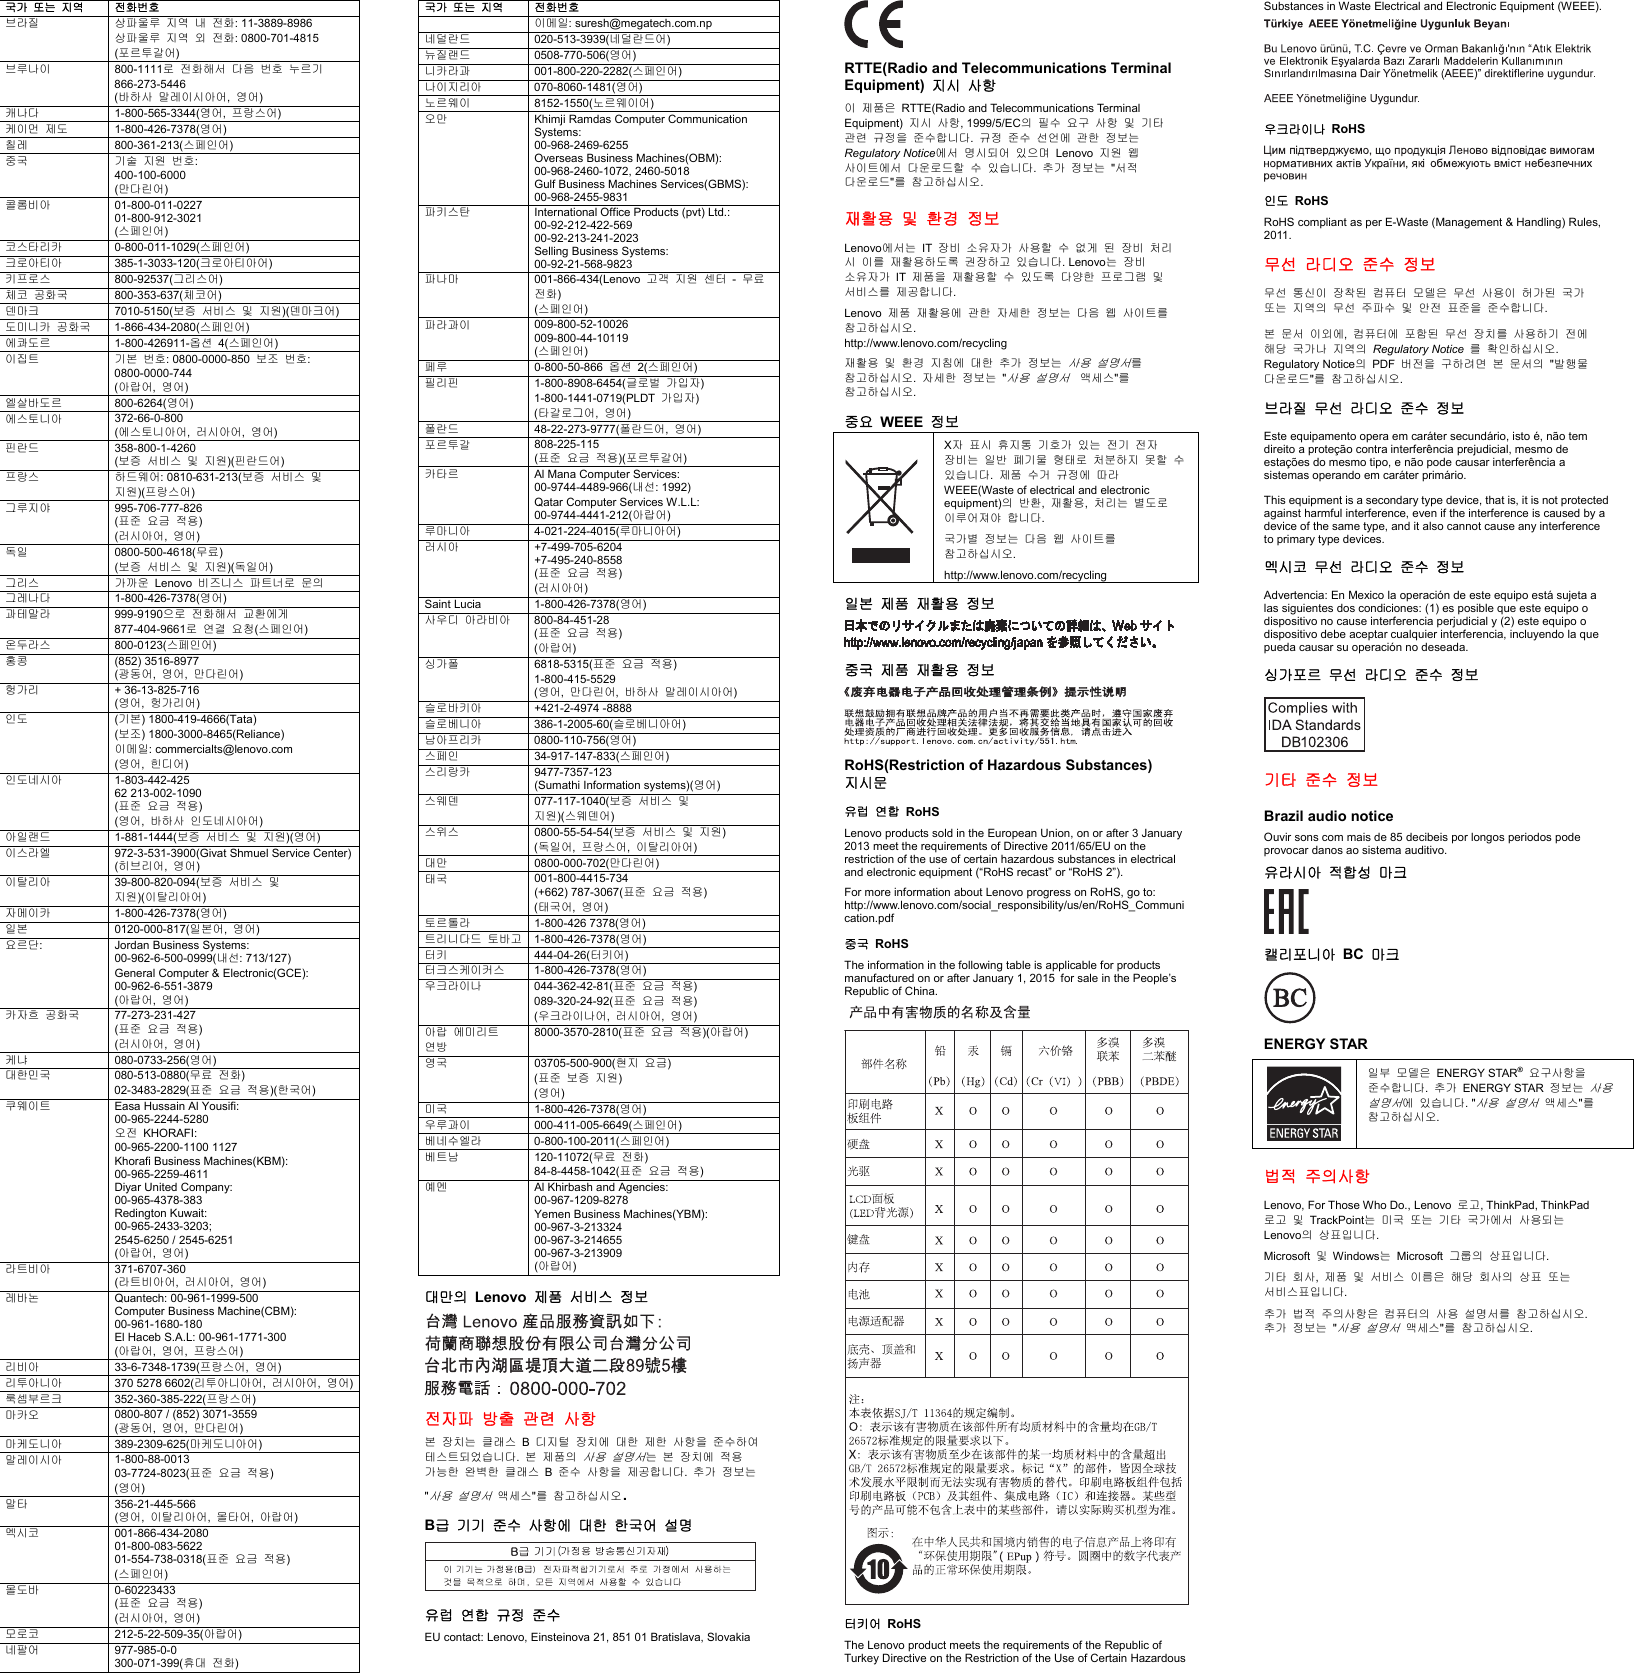 Page 2 of 2 - Lenovo T550 W550S Swsg Ko Sp40K04810 ThinkPad And (Sazan) User Manual (Korean) Safety, Warranty, Setup Guide - Think Pad T550, Laptop (Think Pad)